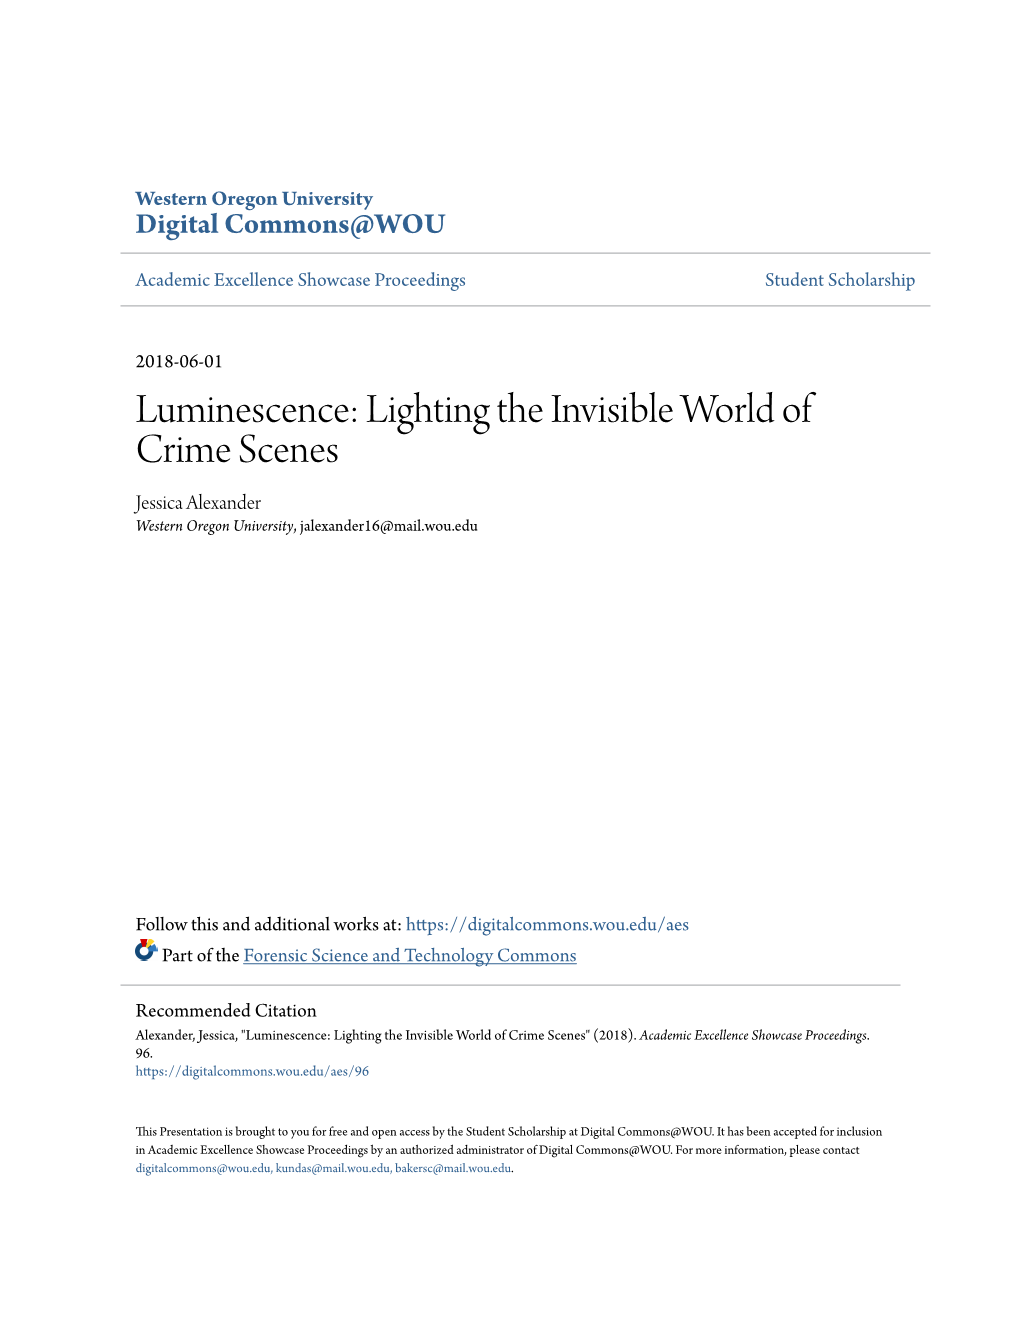 Luminescence: Lighting the Invisible World of Crime Scenes Jessica Alexander Western Oregon University, Jalexander16@Mail.Wou.Edu